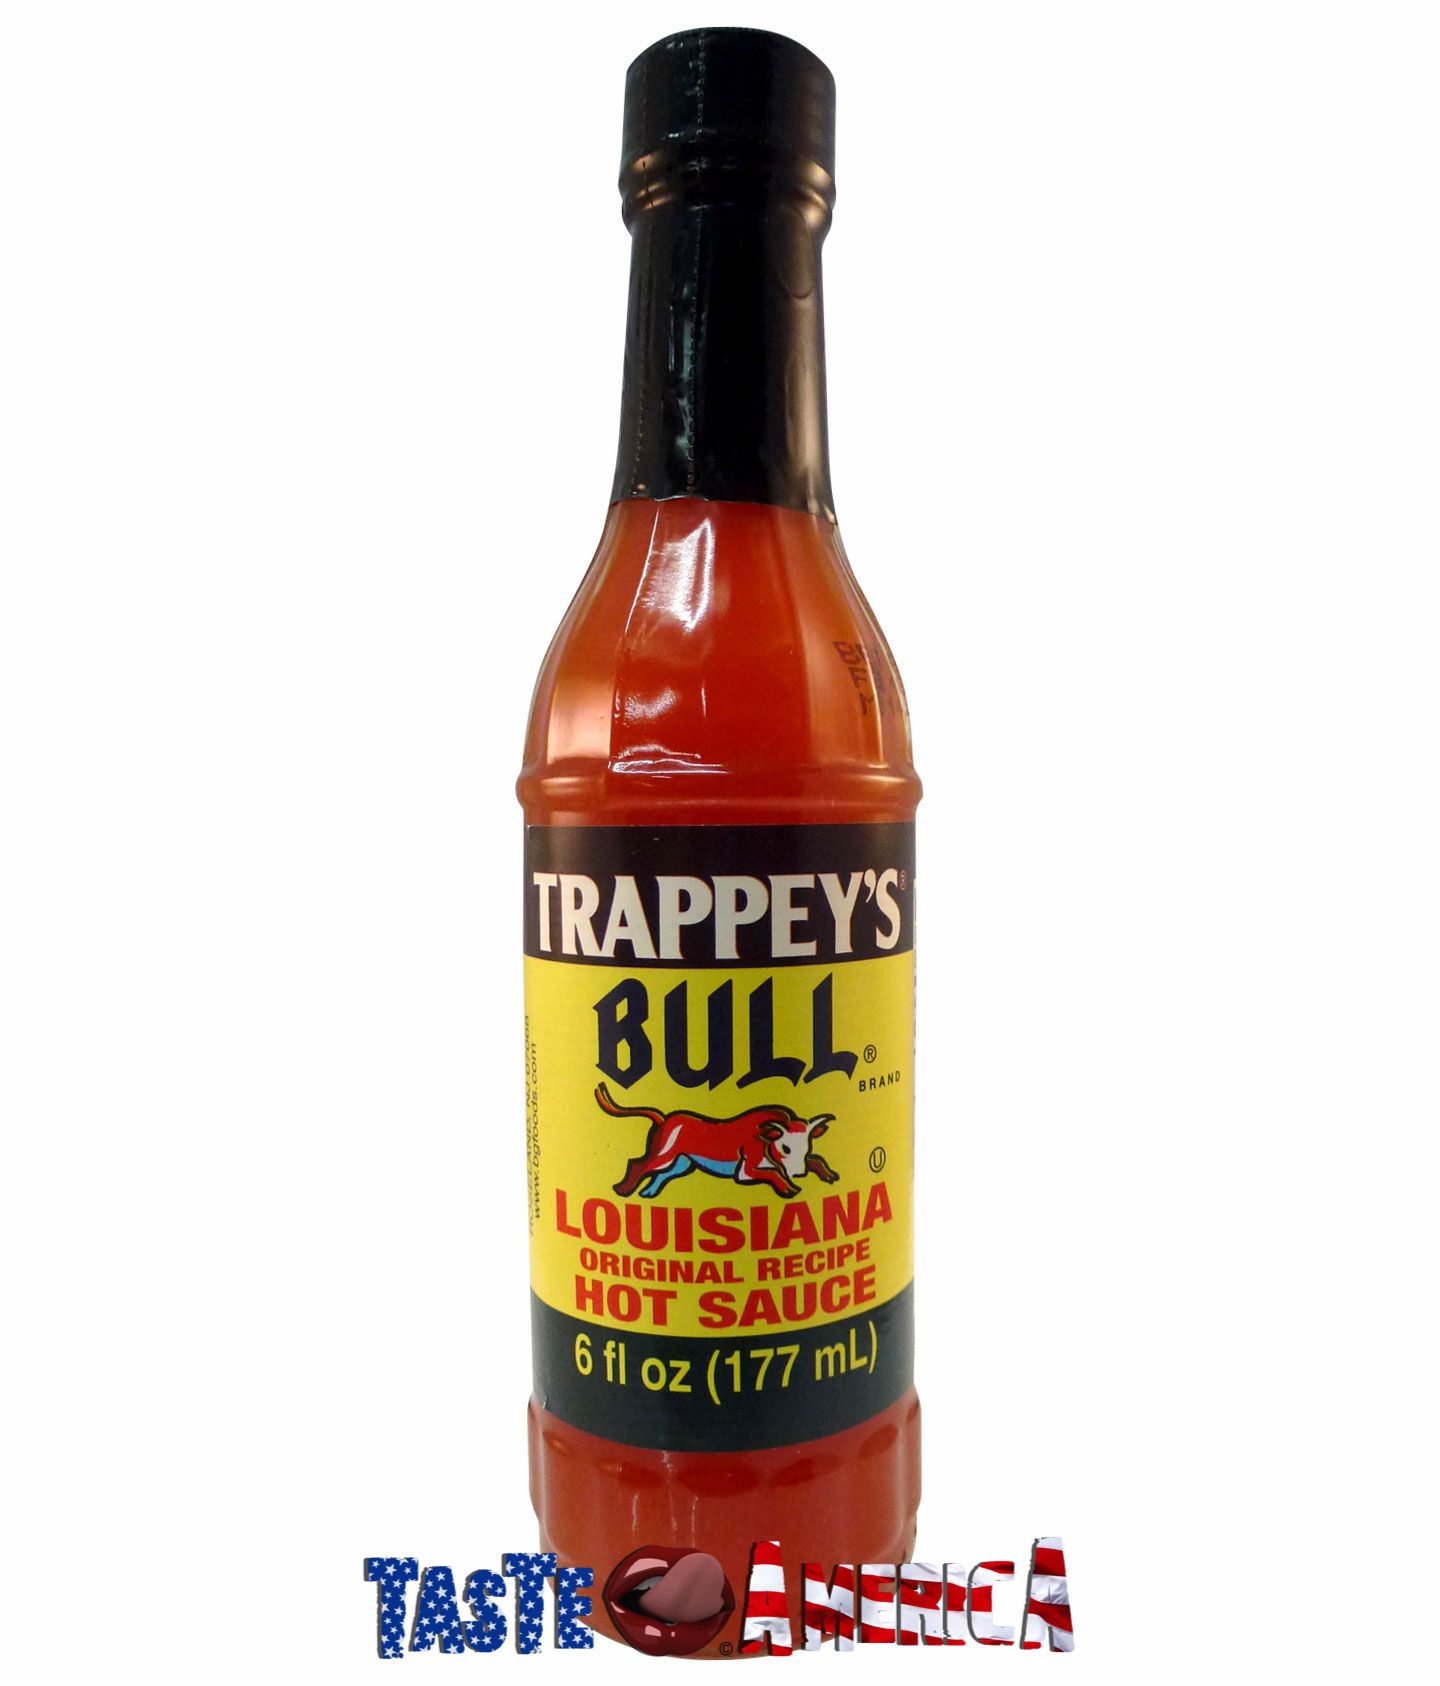 Trappeys, Bull Brand, Louisiana Hot Sauce